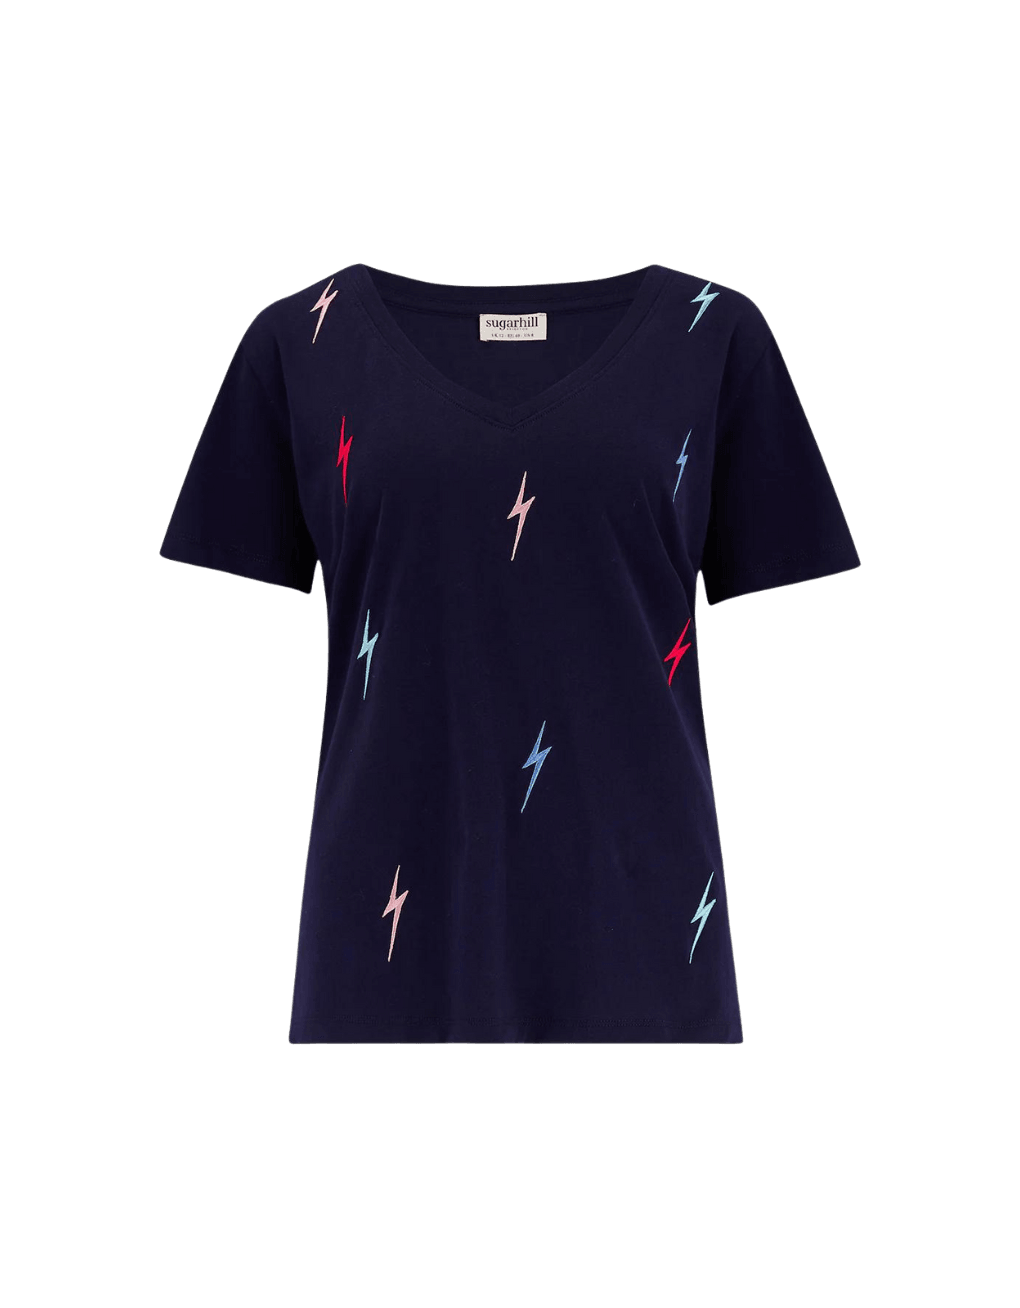 Camiseta Sugarhill Brighton Khloe Cuello Pico Navy Lightning Embroidery - ECRU